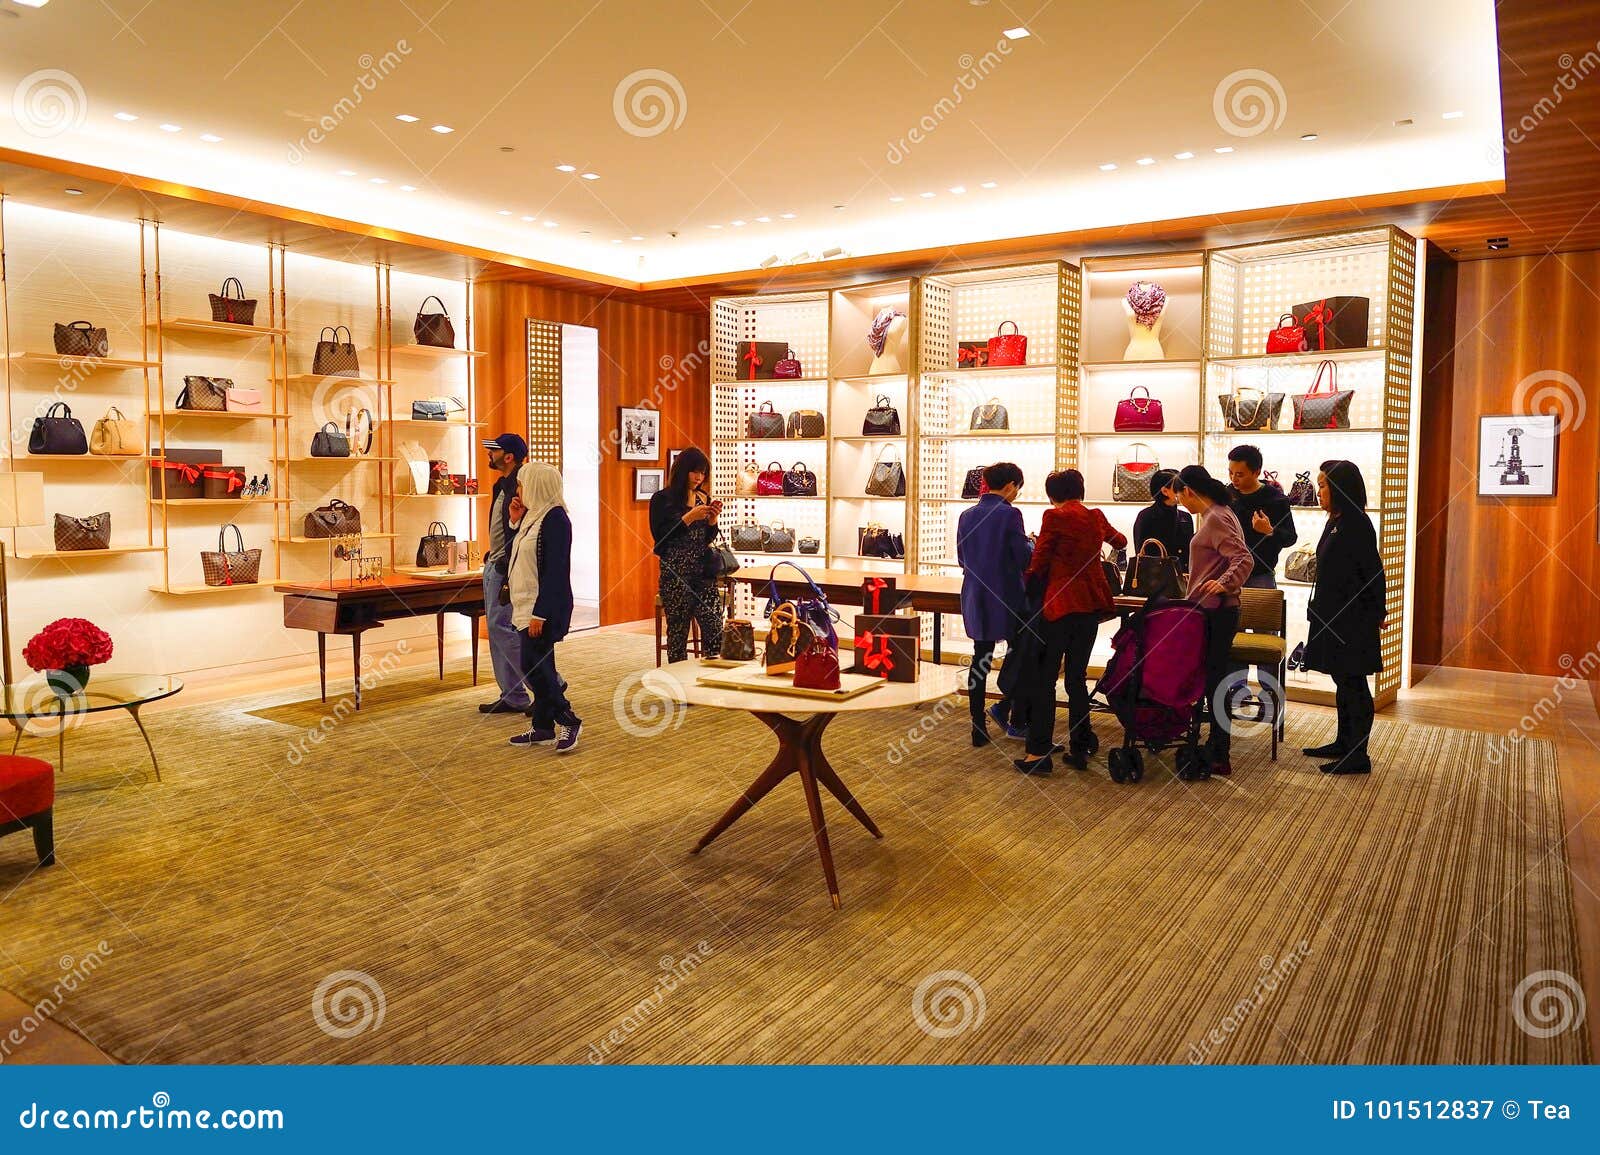 Louis Vuitton store editorial stock image. Image of interior - 101519054